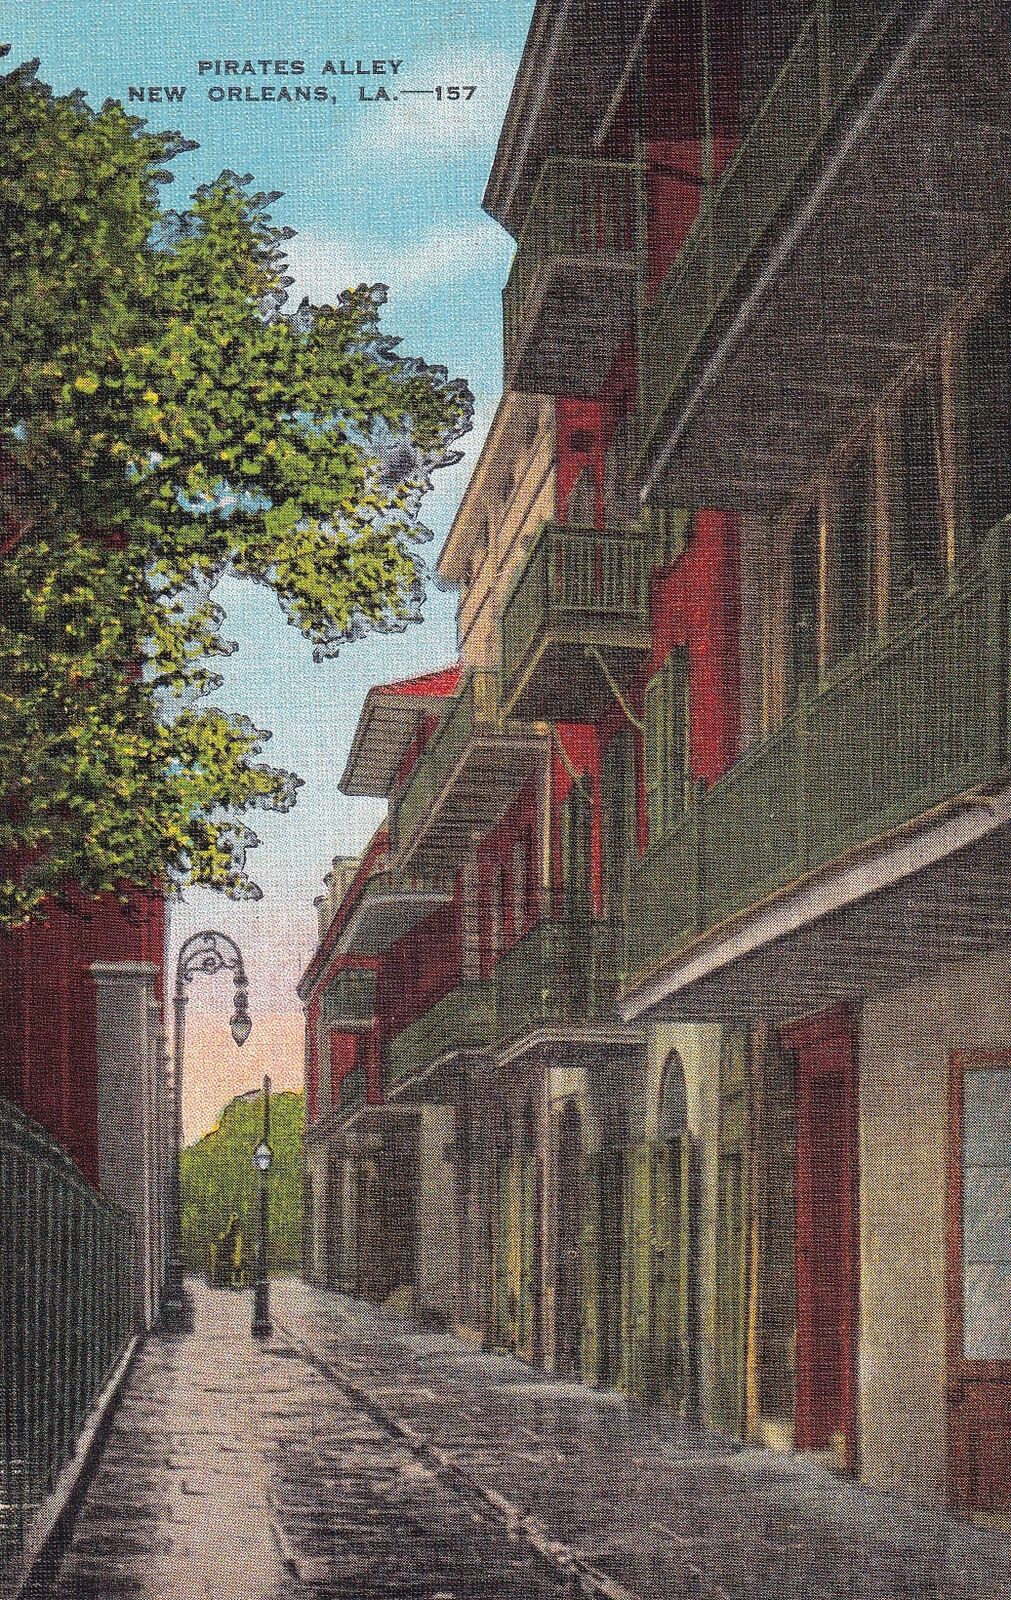 New Orleans Louisiana LA Pirates Alley Postcard D06